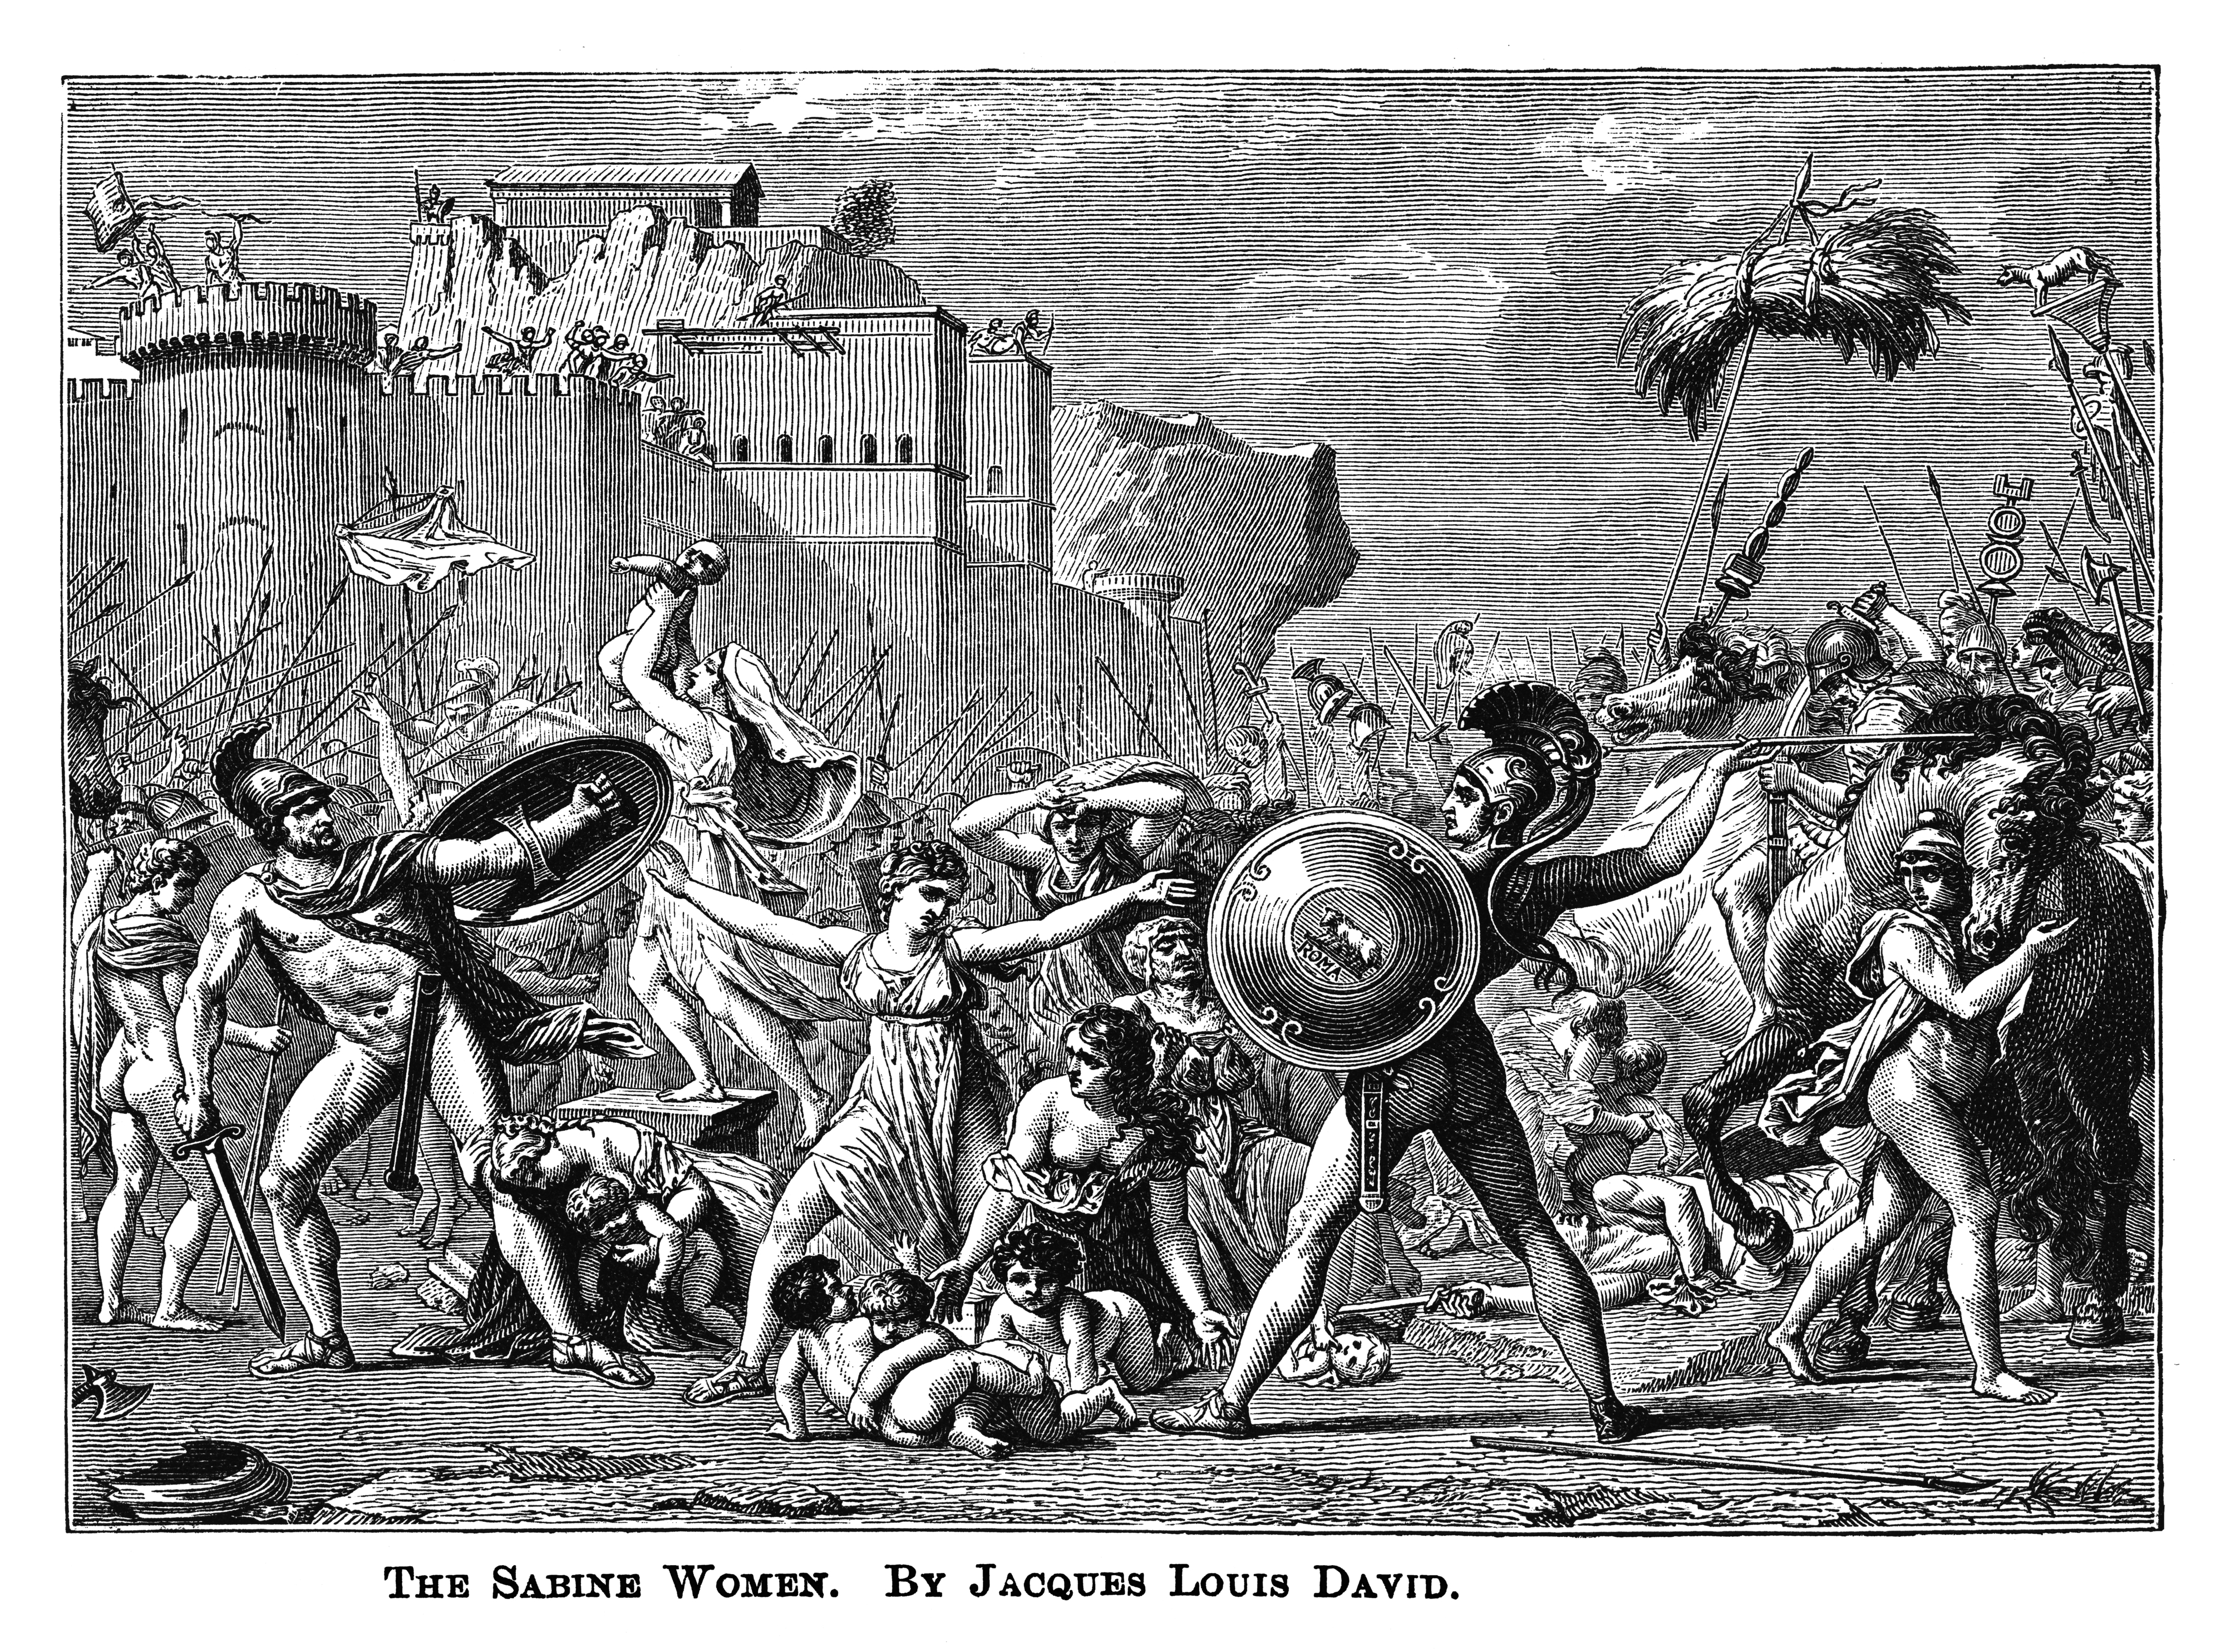 drawing of sabine women fighting